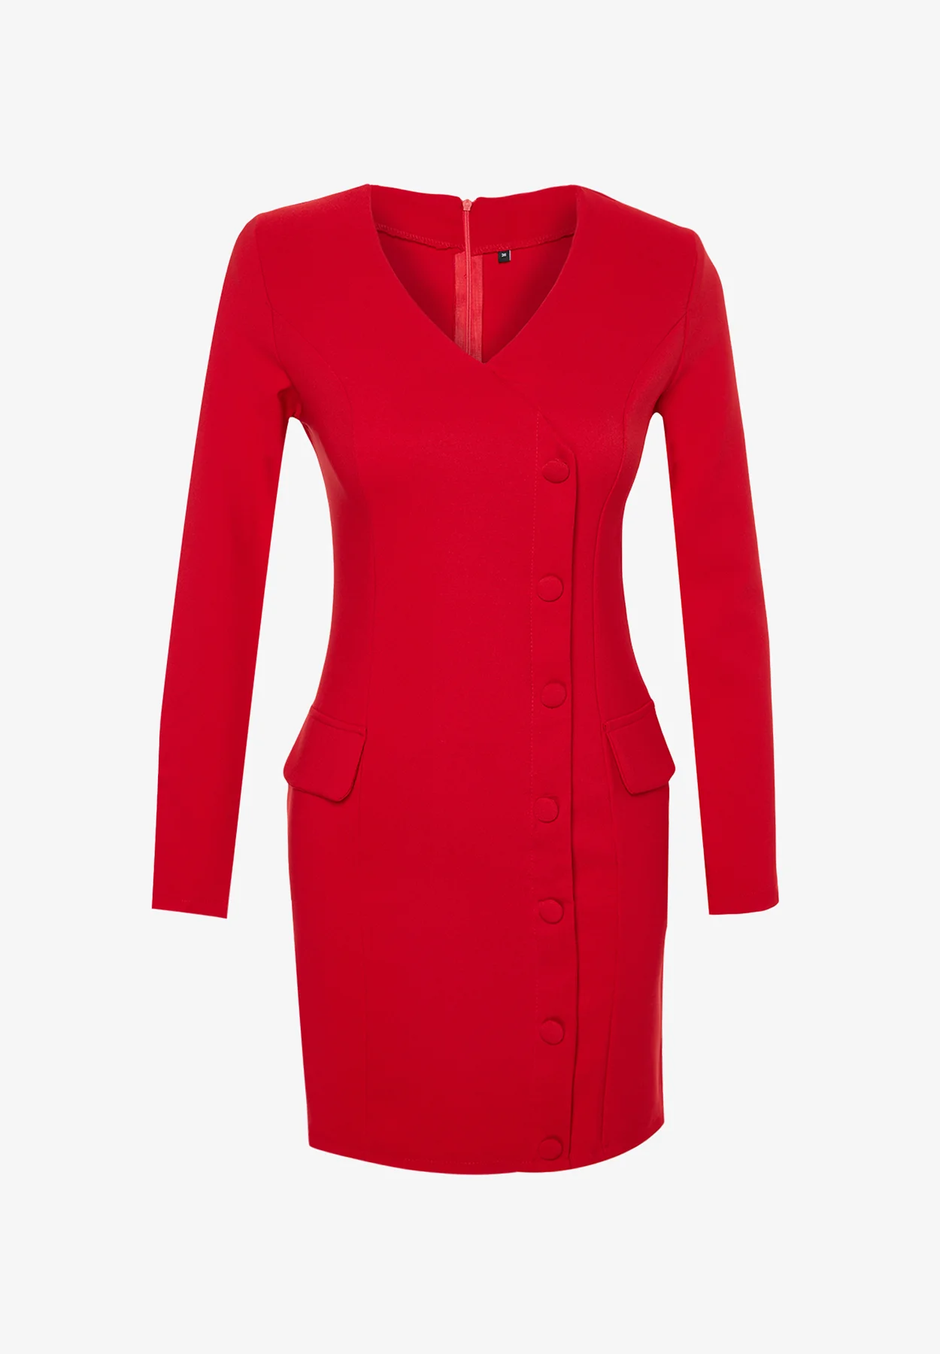 Foto: Trenydol, crvena haljina s gumbima (44,99 eura) | Autor: 